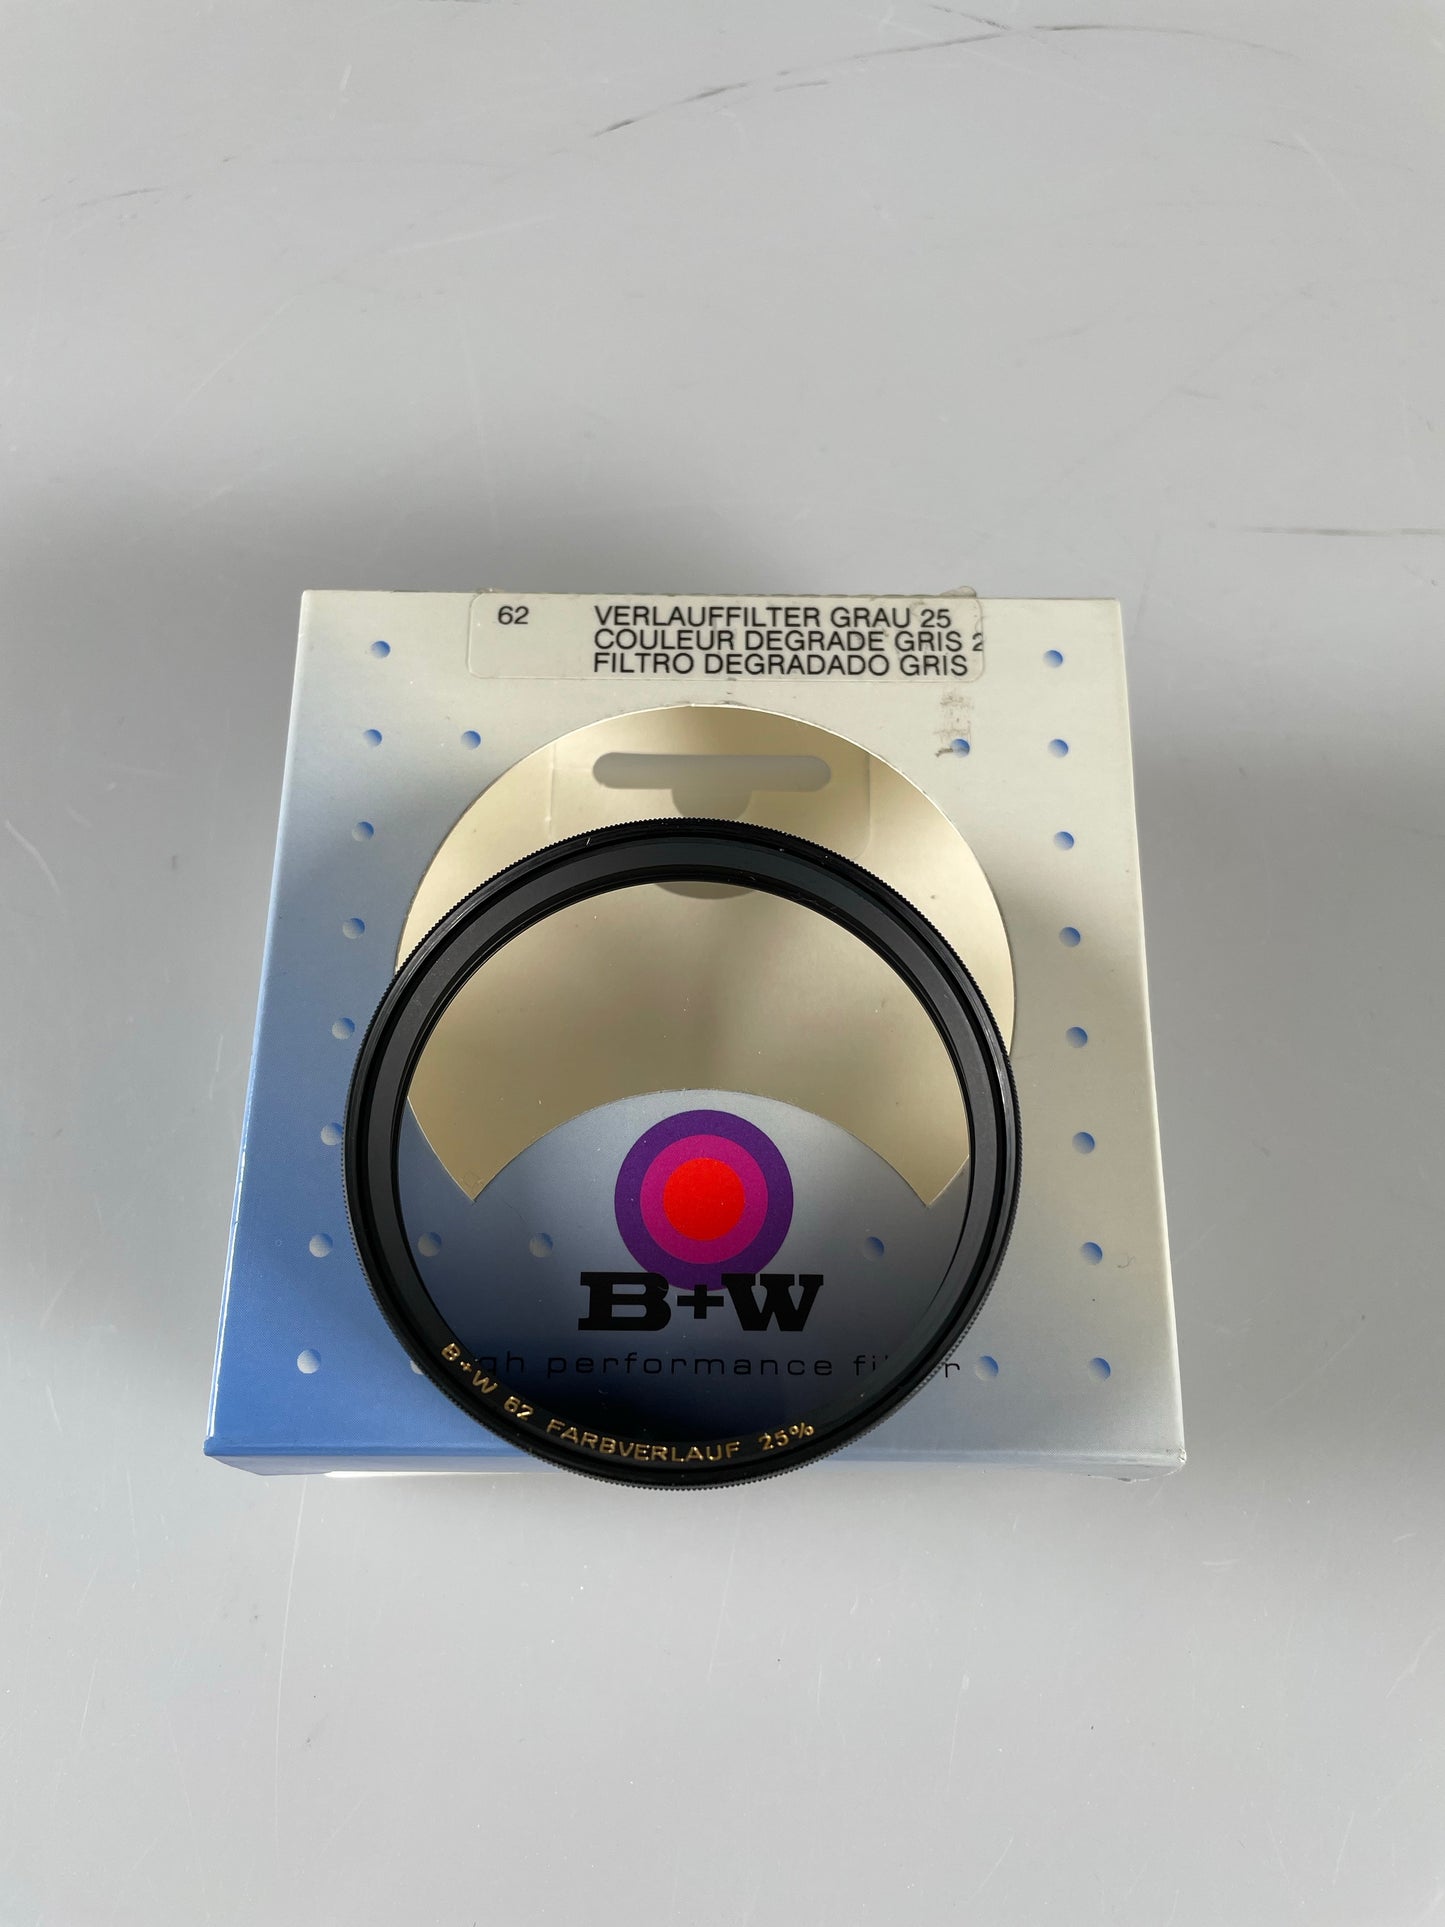 B+W 62mm Farbverlauf Grau 25% filter